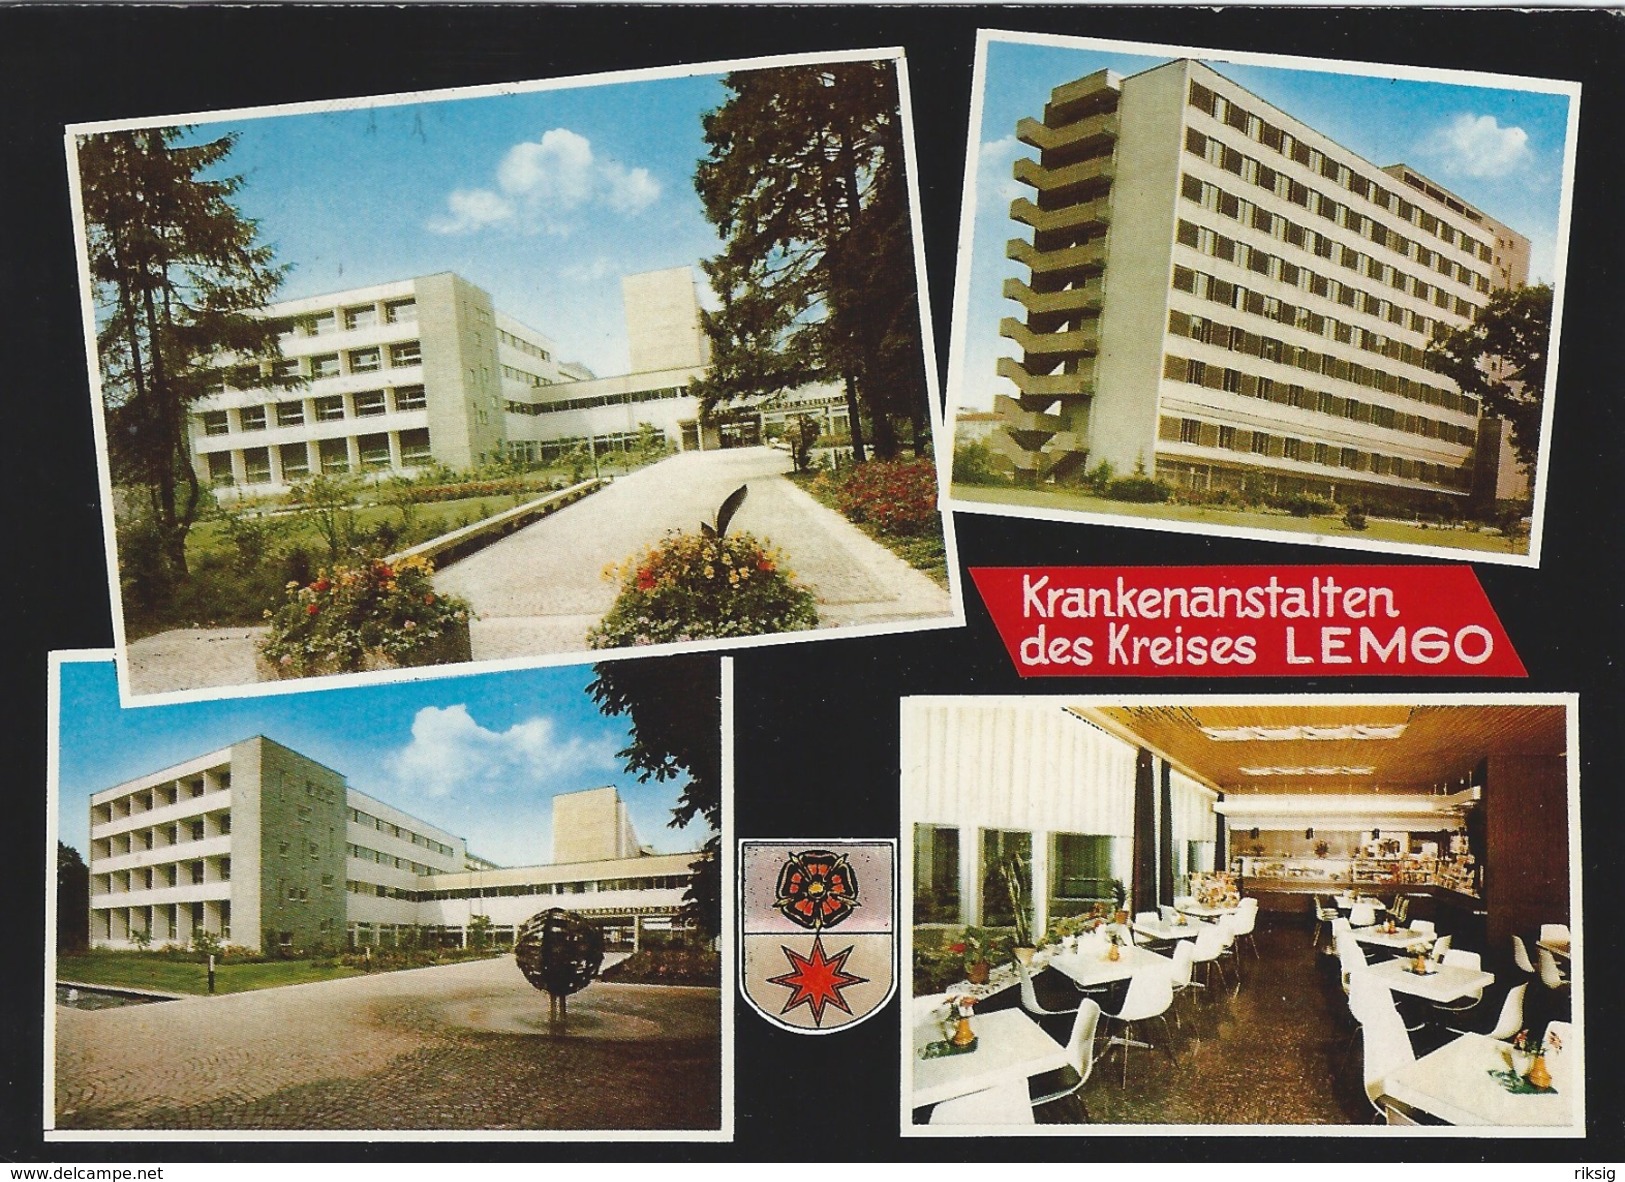 Krankenanstalten Des Kreises LEMGO.    Germany.   # 05564 - Lemgo